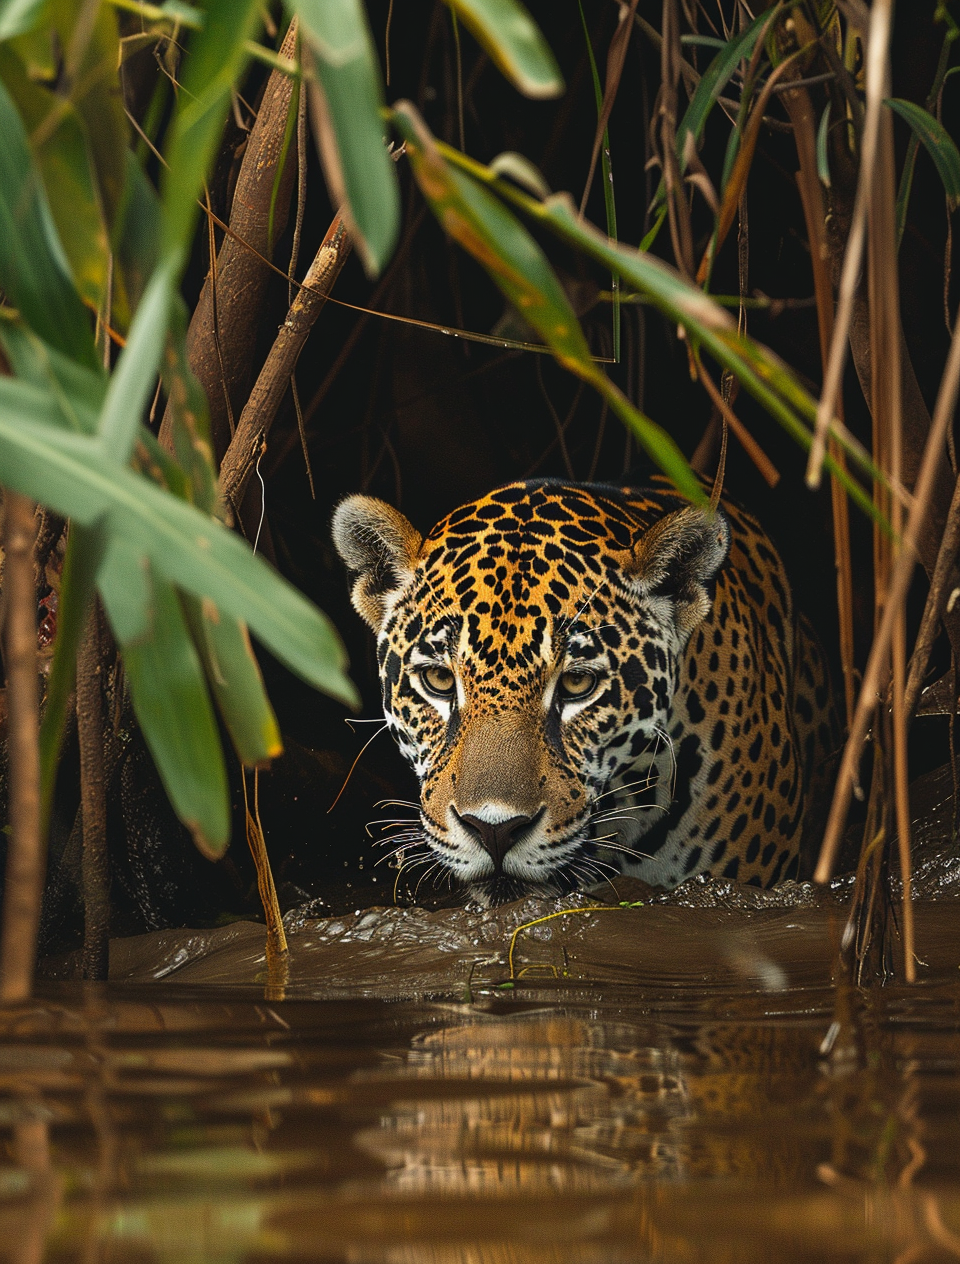 Jaguar in the Jungle 3.0